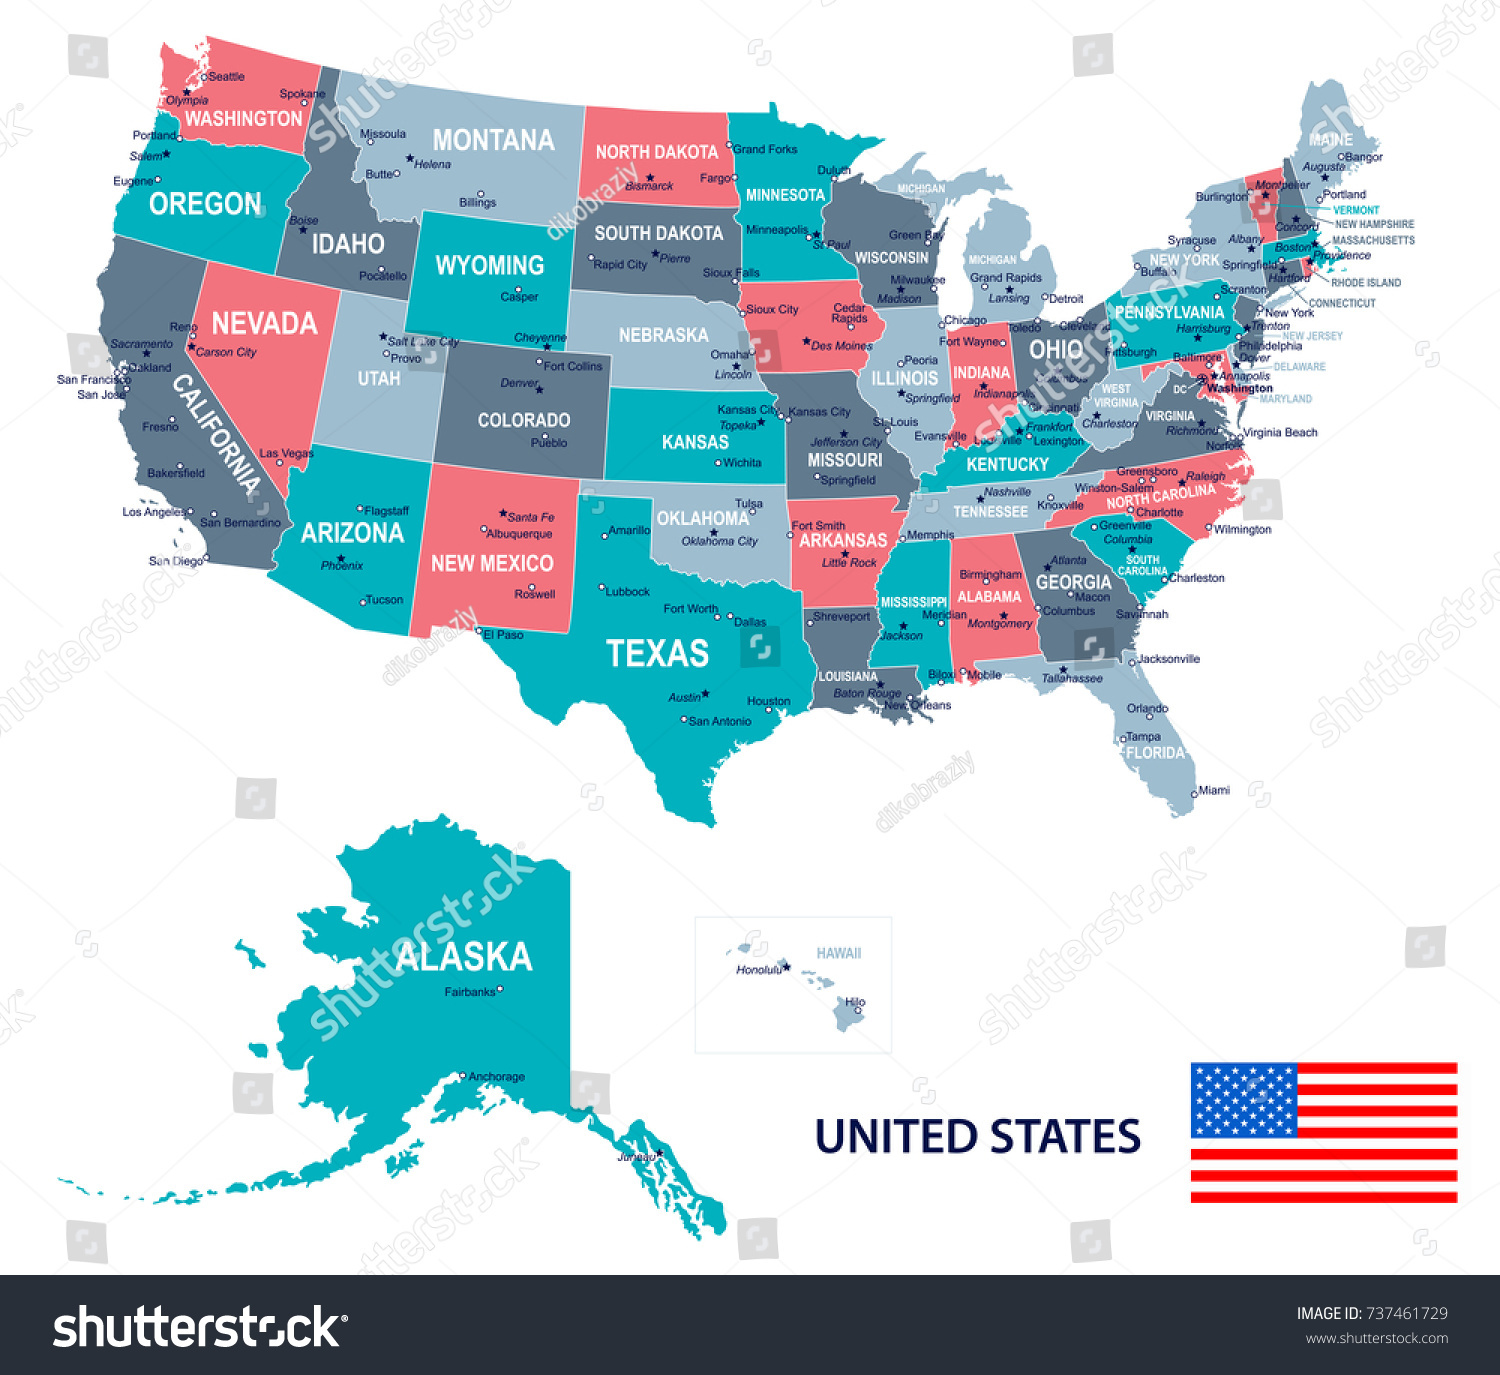 SVG of United States map and flag - vector illustration svg